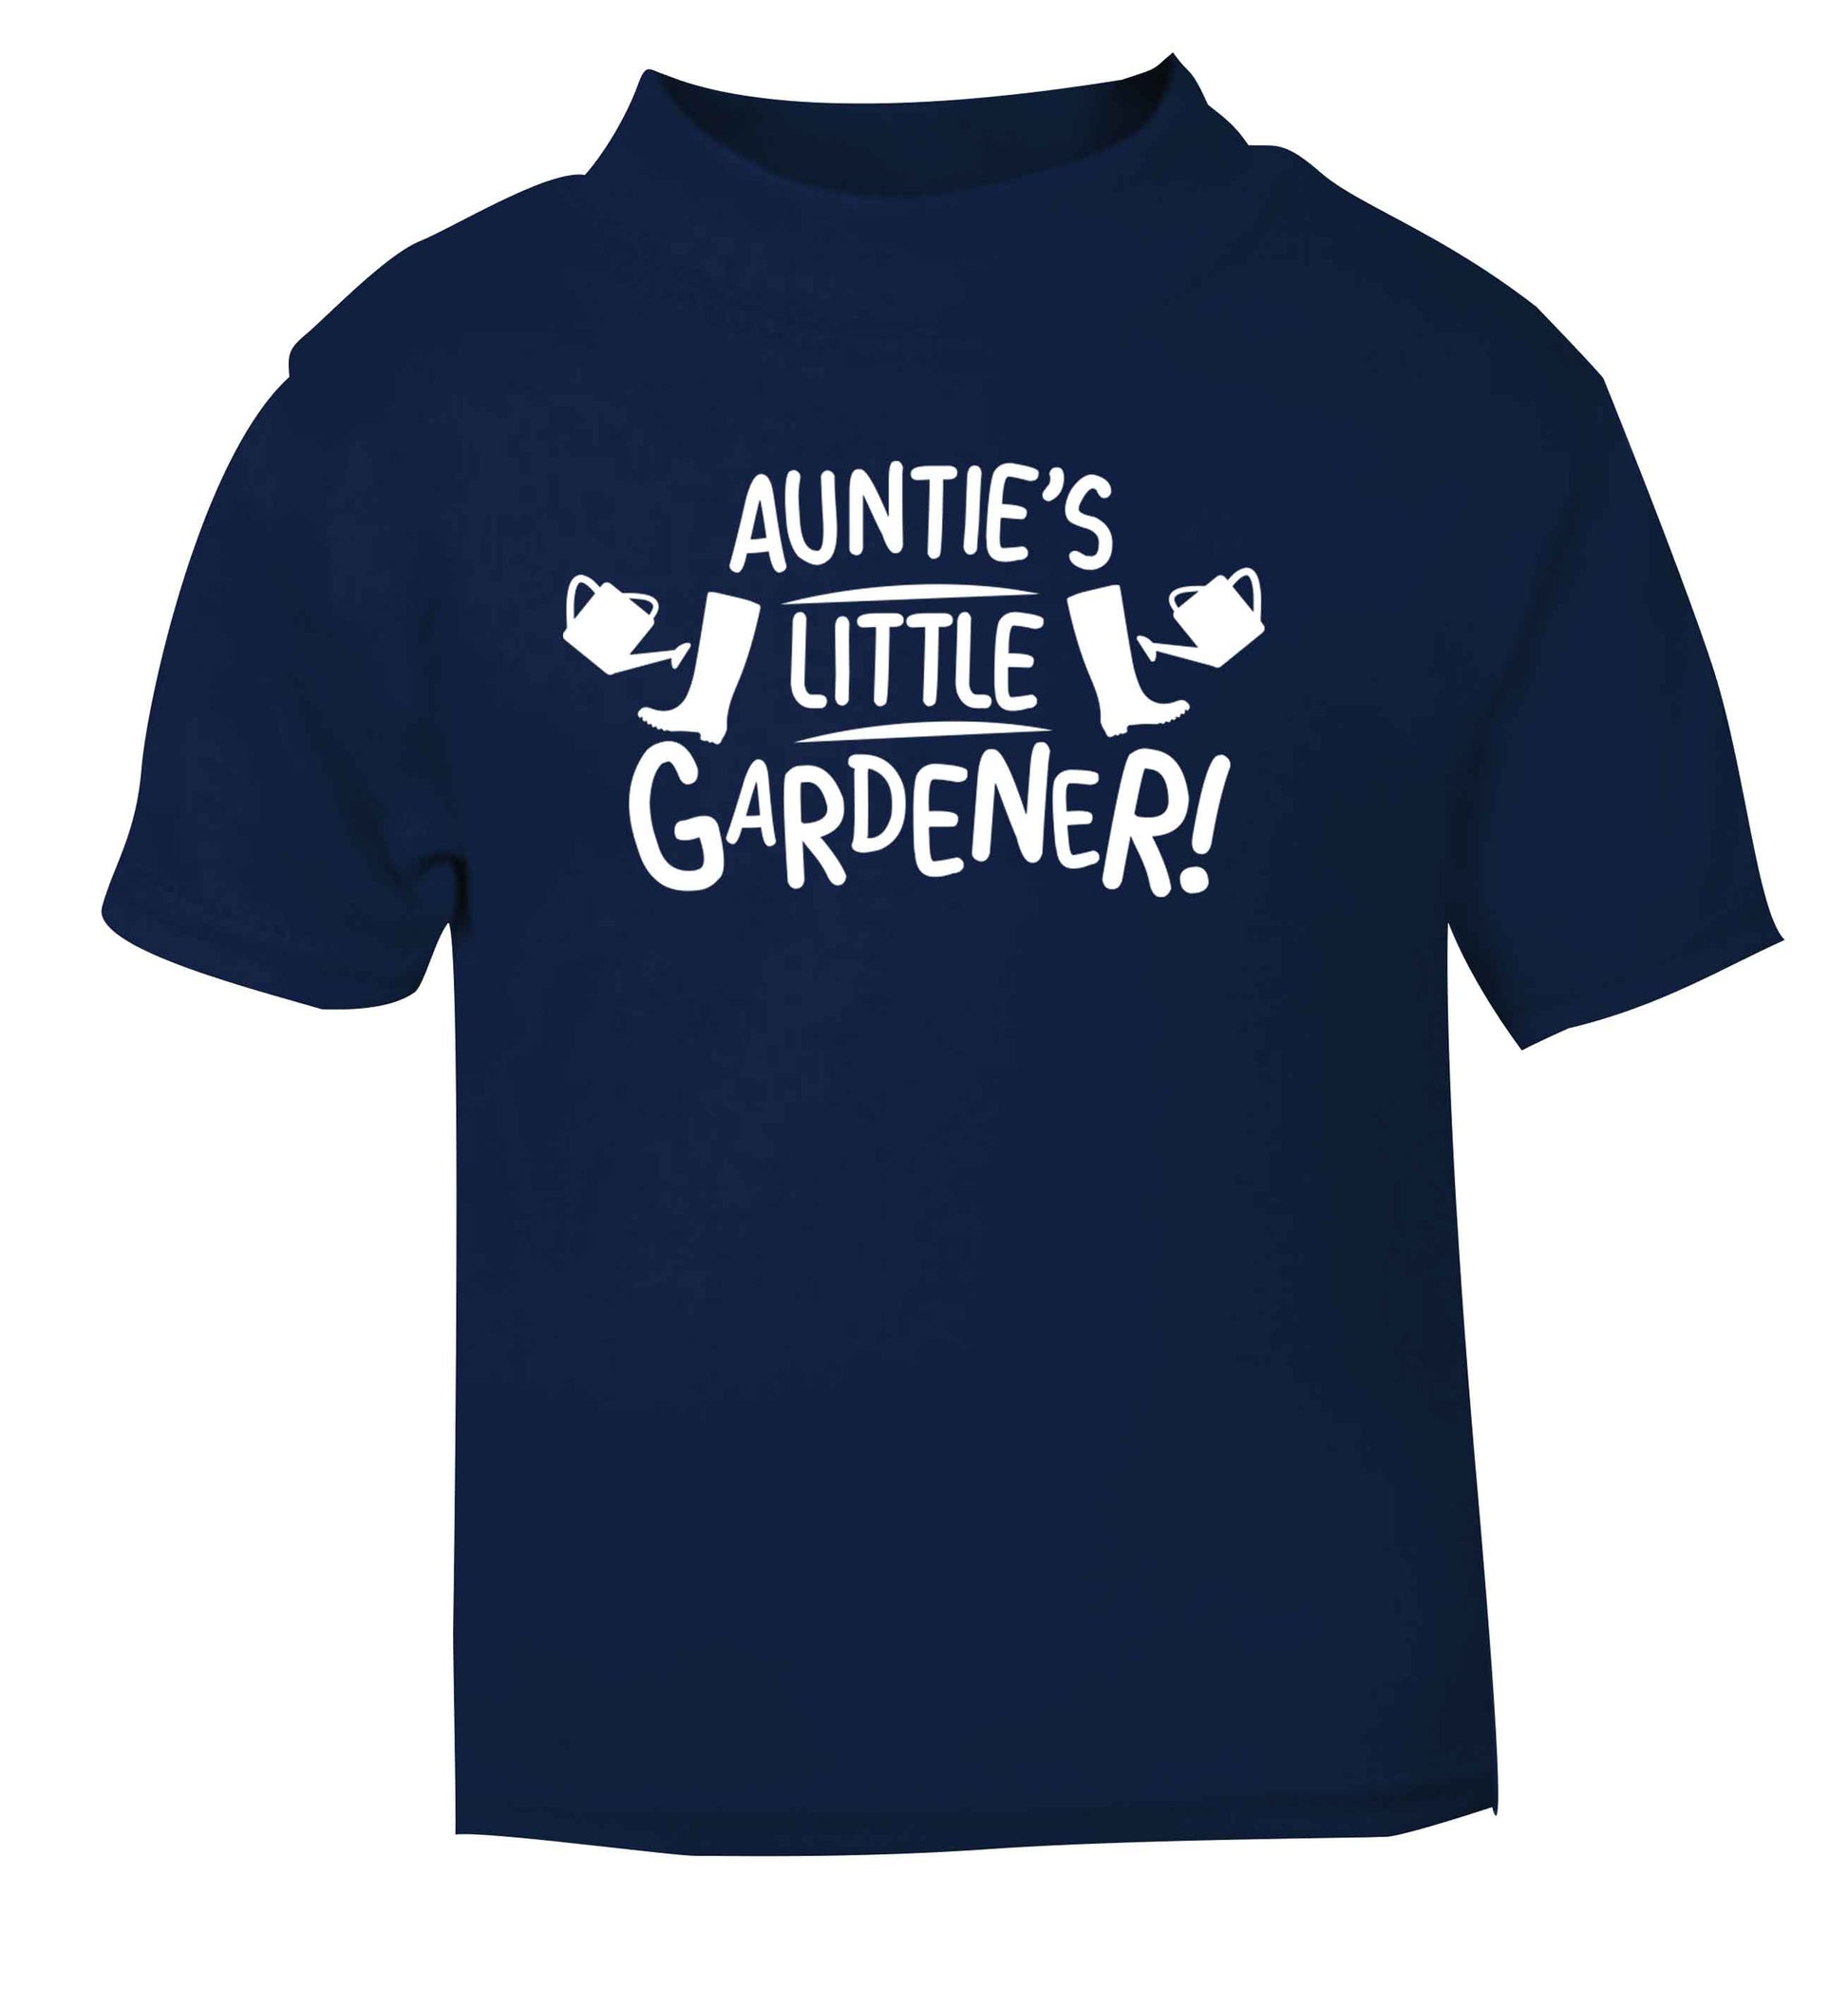 Auntie's little gardener navy Baby Toddler Tshirt 2 Years